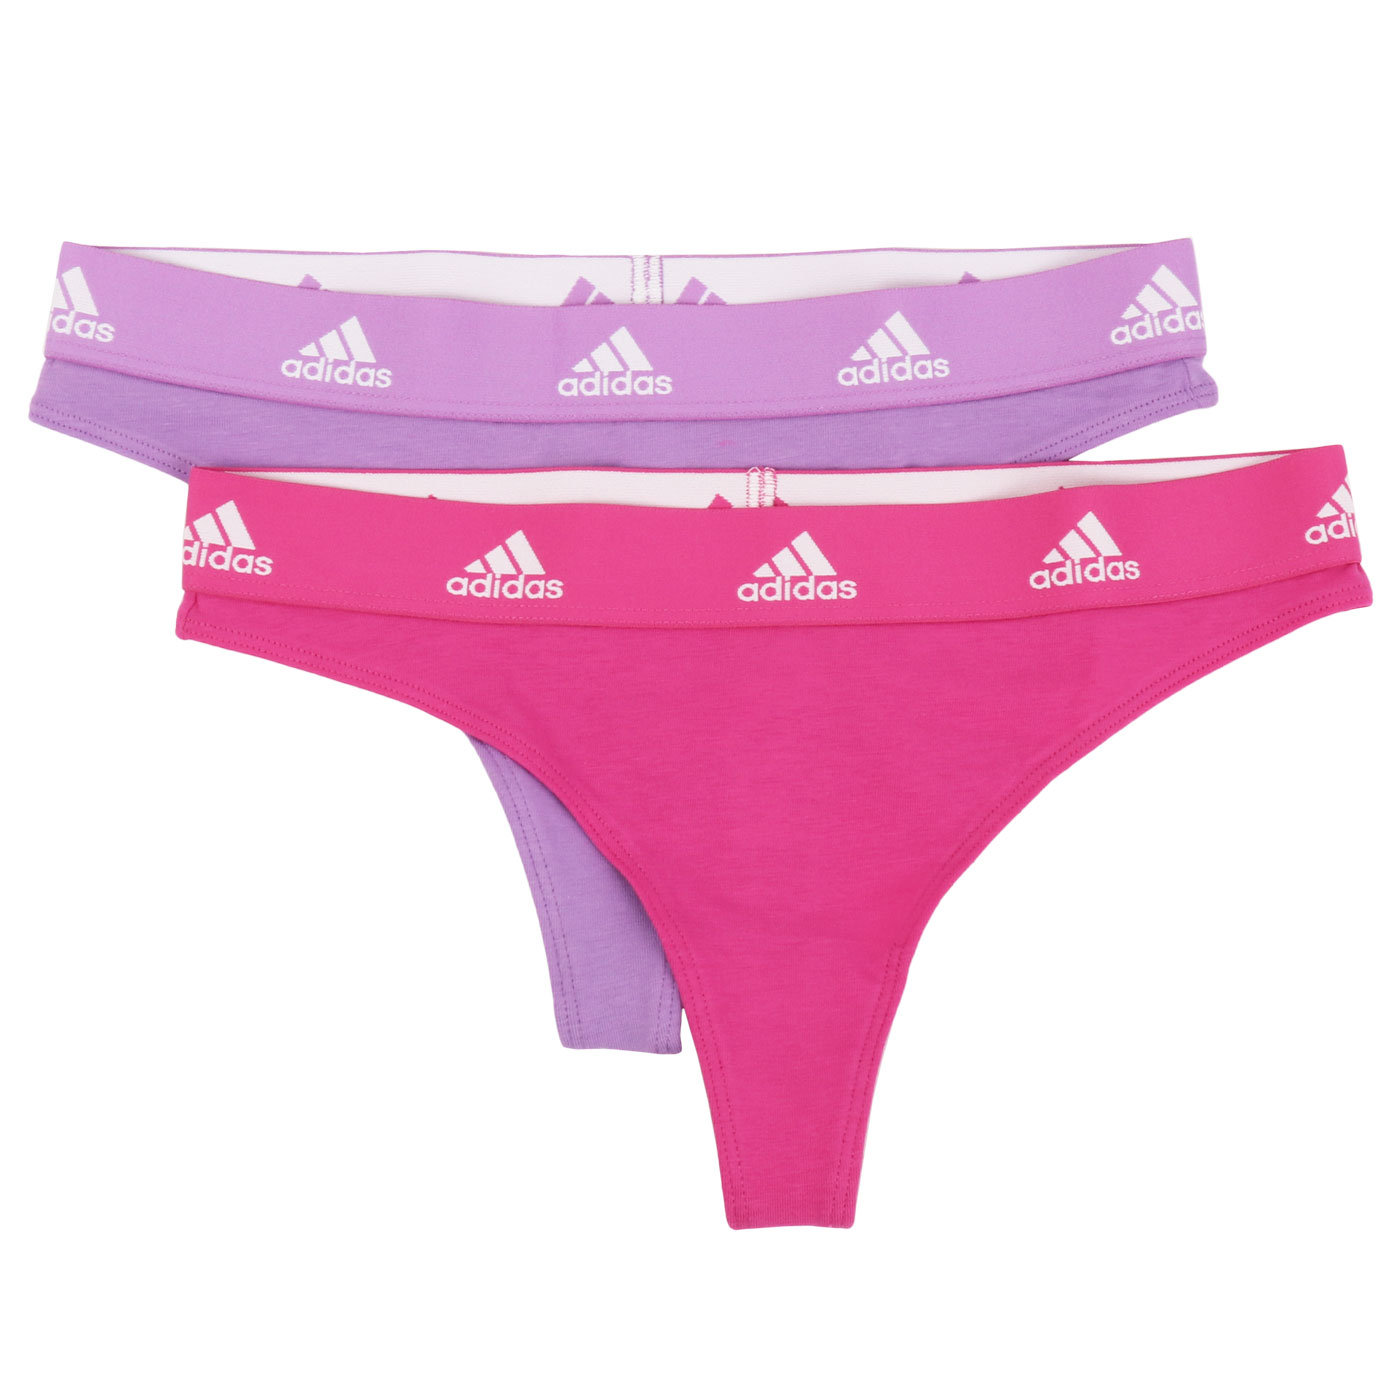 adidas Sports Underwear Cotton Logo - - 2 Tanga Pack 946-assorted Damen